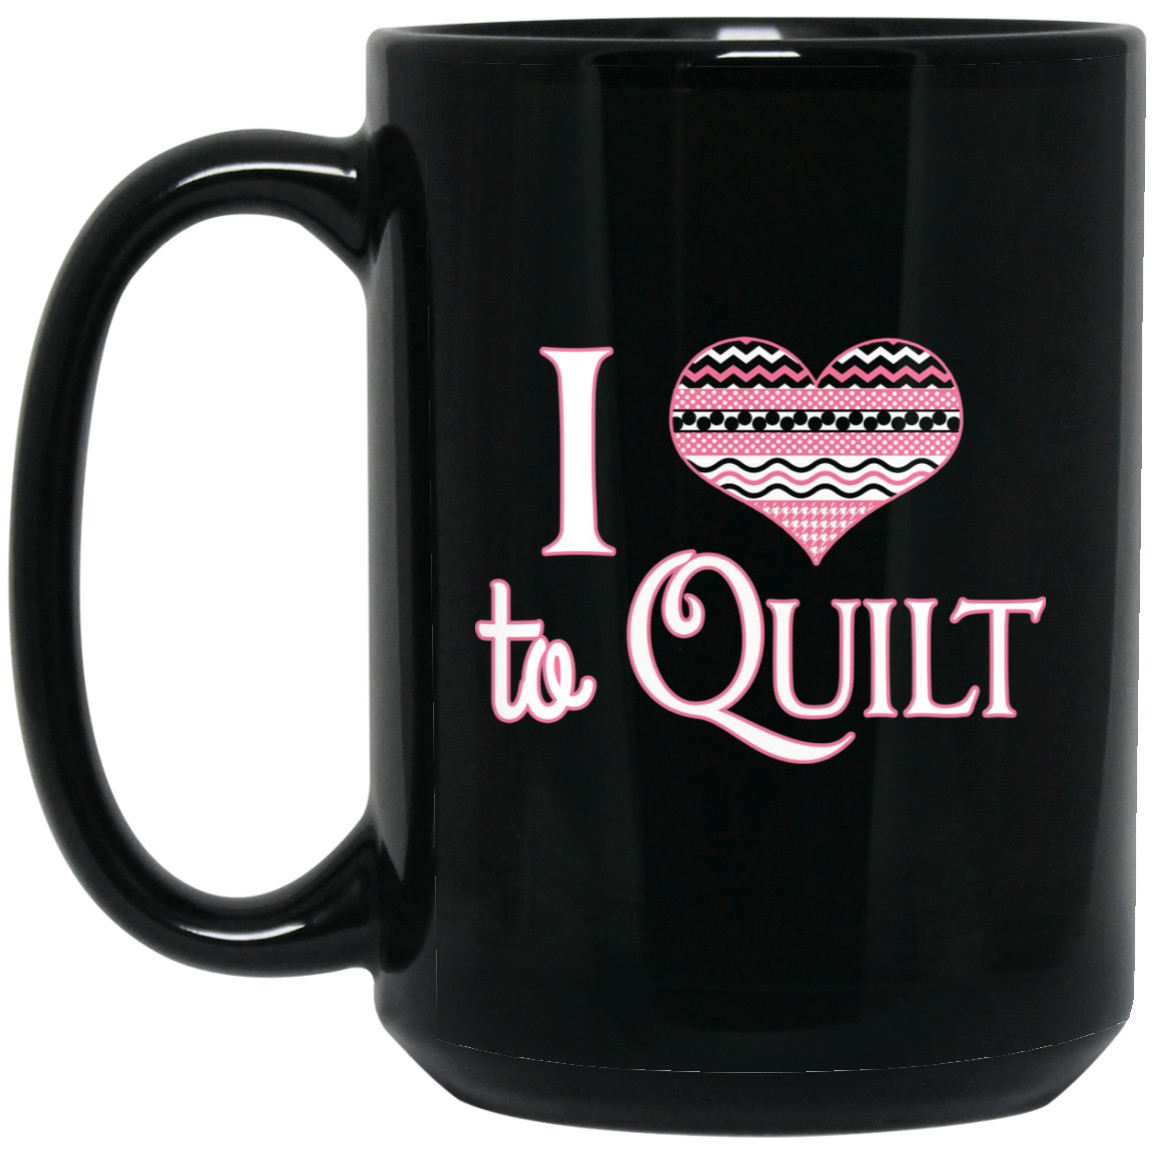 I Heart to Quilt Black Mugs